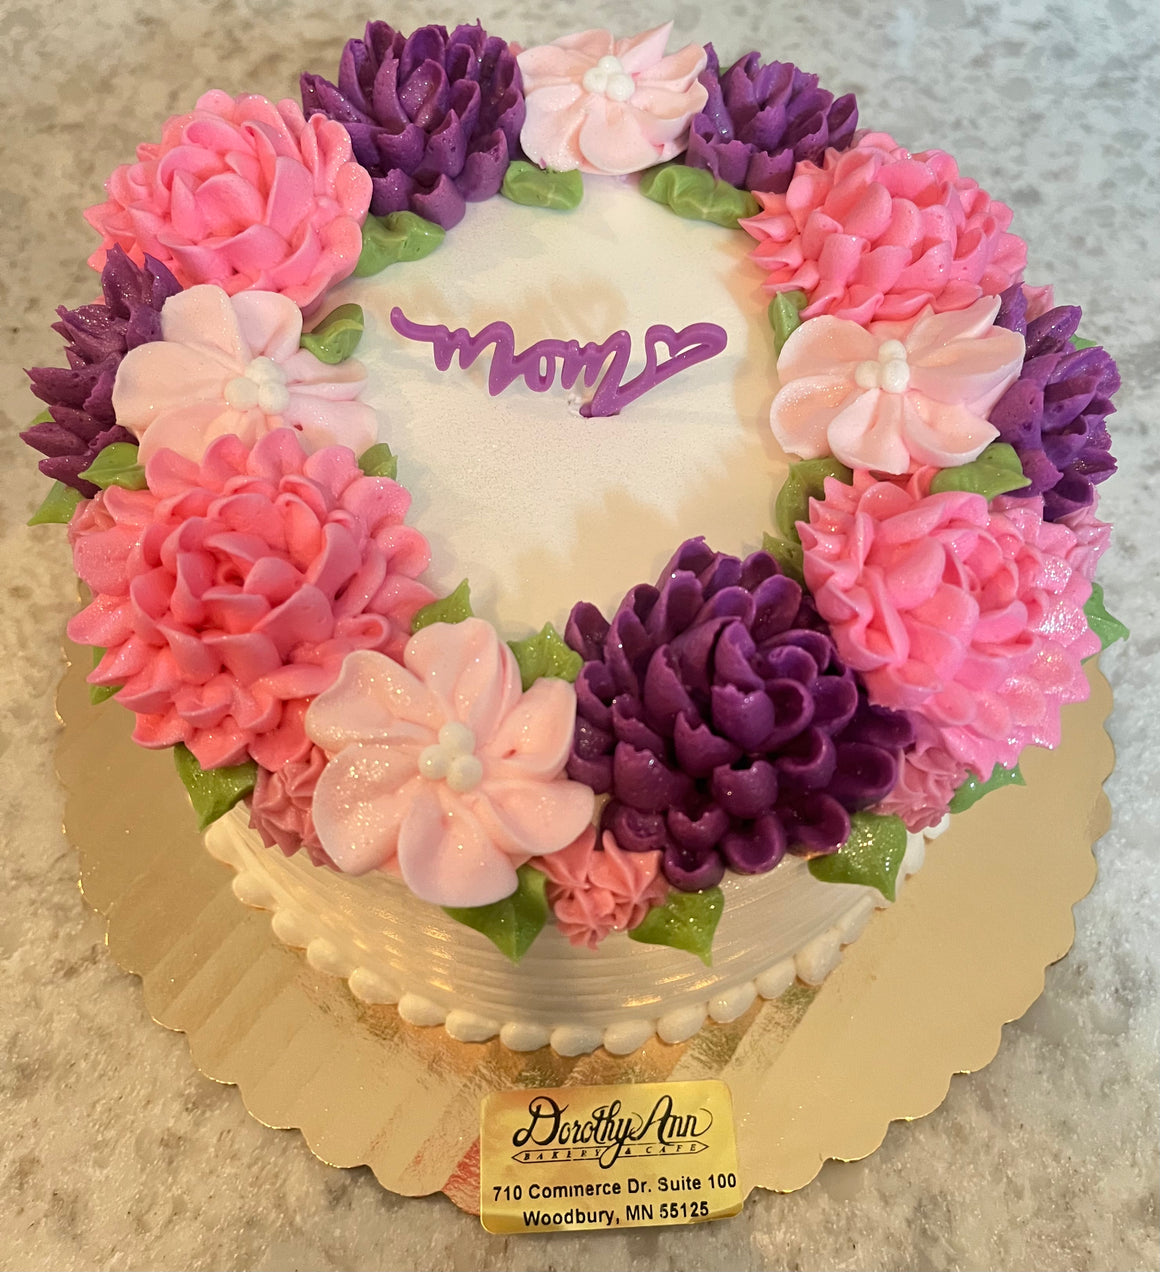 "Vivenne Design" Floral Wreath Cake Design 8" Round (Copy)